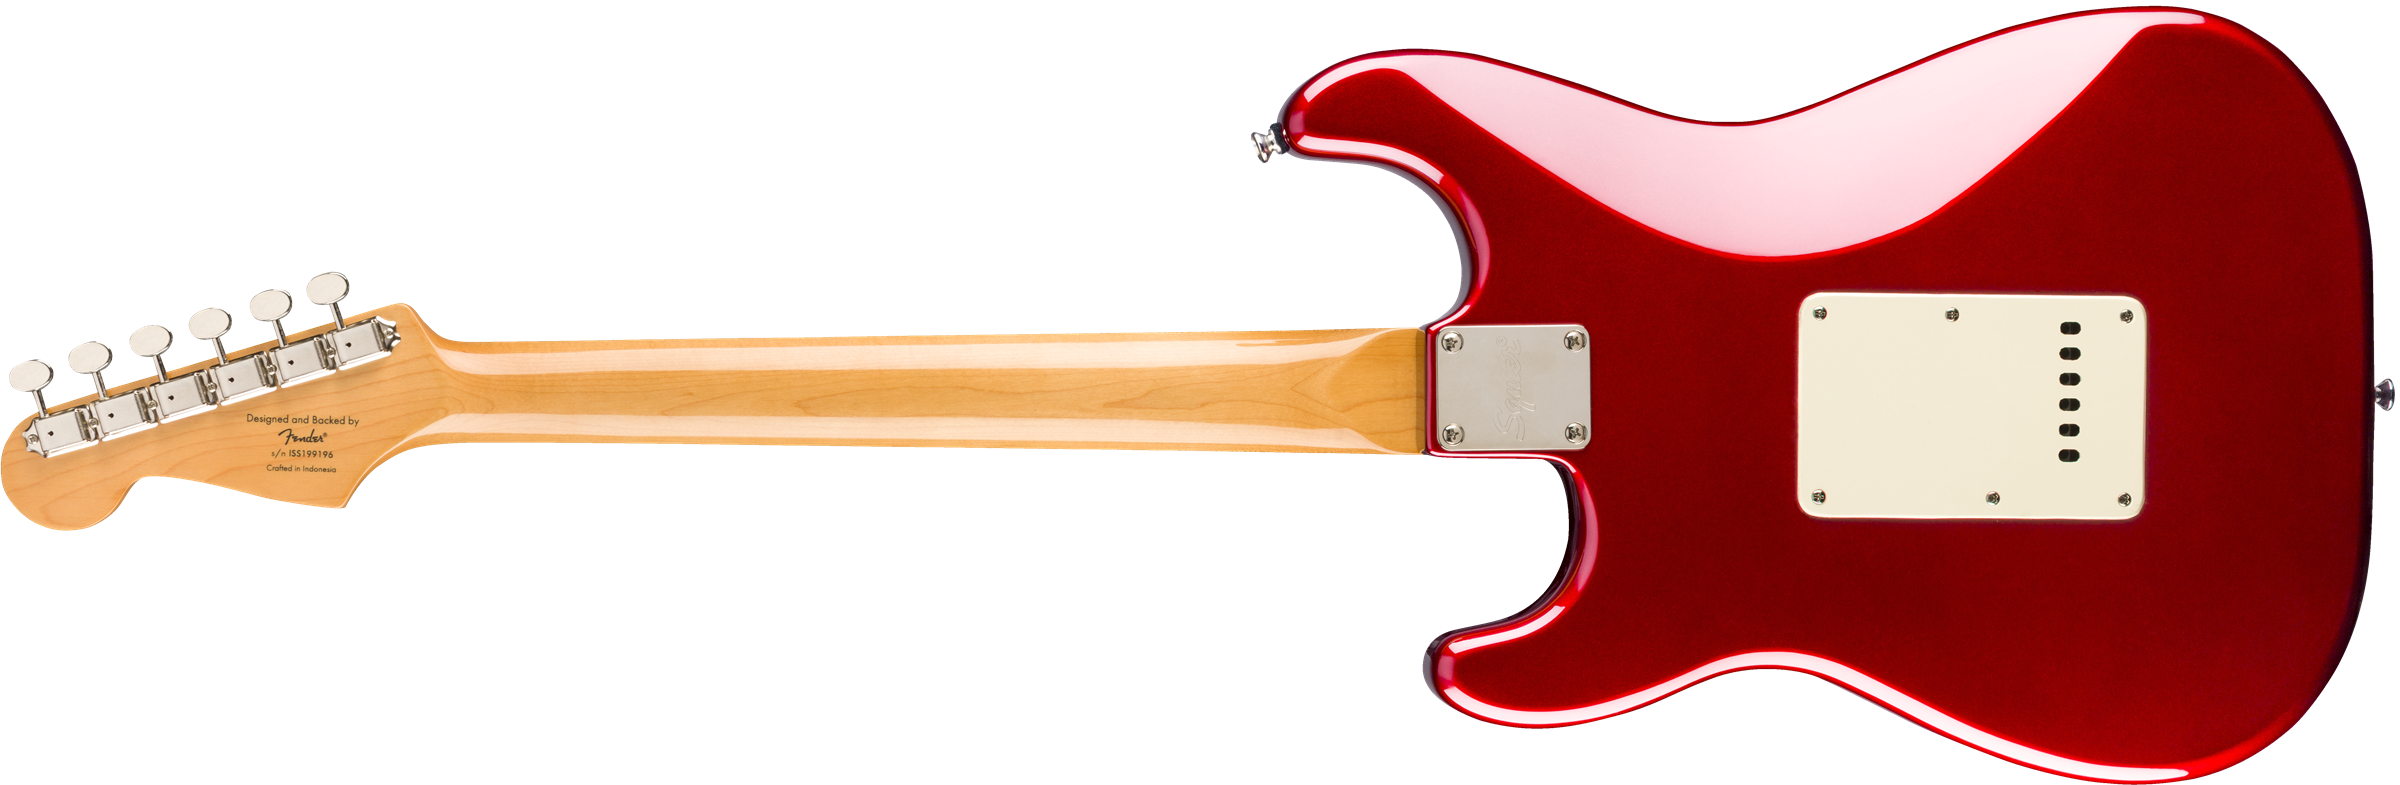 Squier Strat '60s Classic Vibe 2019 Lau 2019 - Candy Apple Red - Guitarra eléctrica con forma de str. - Variation 1